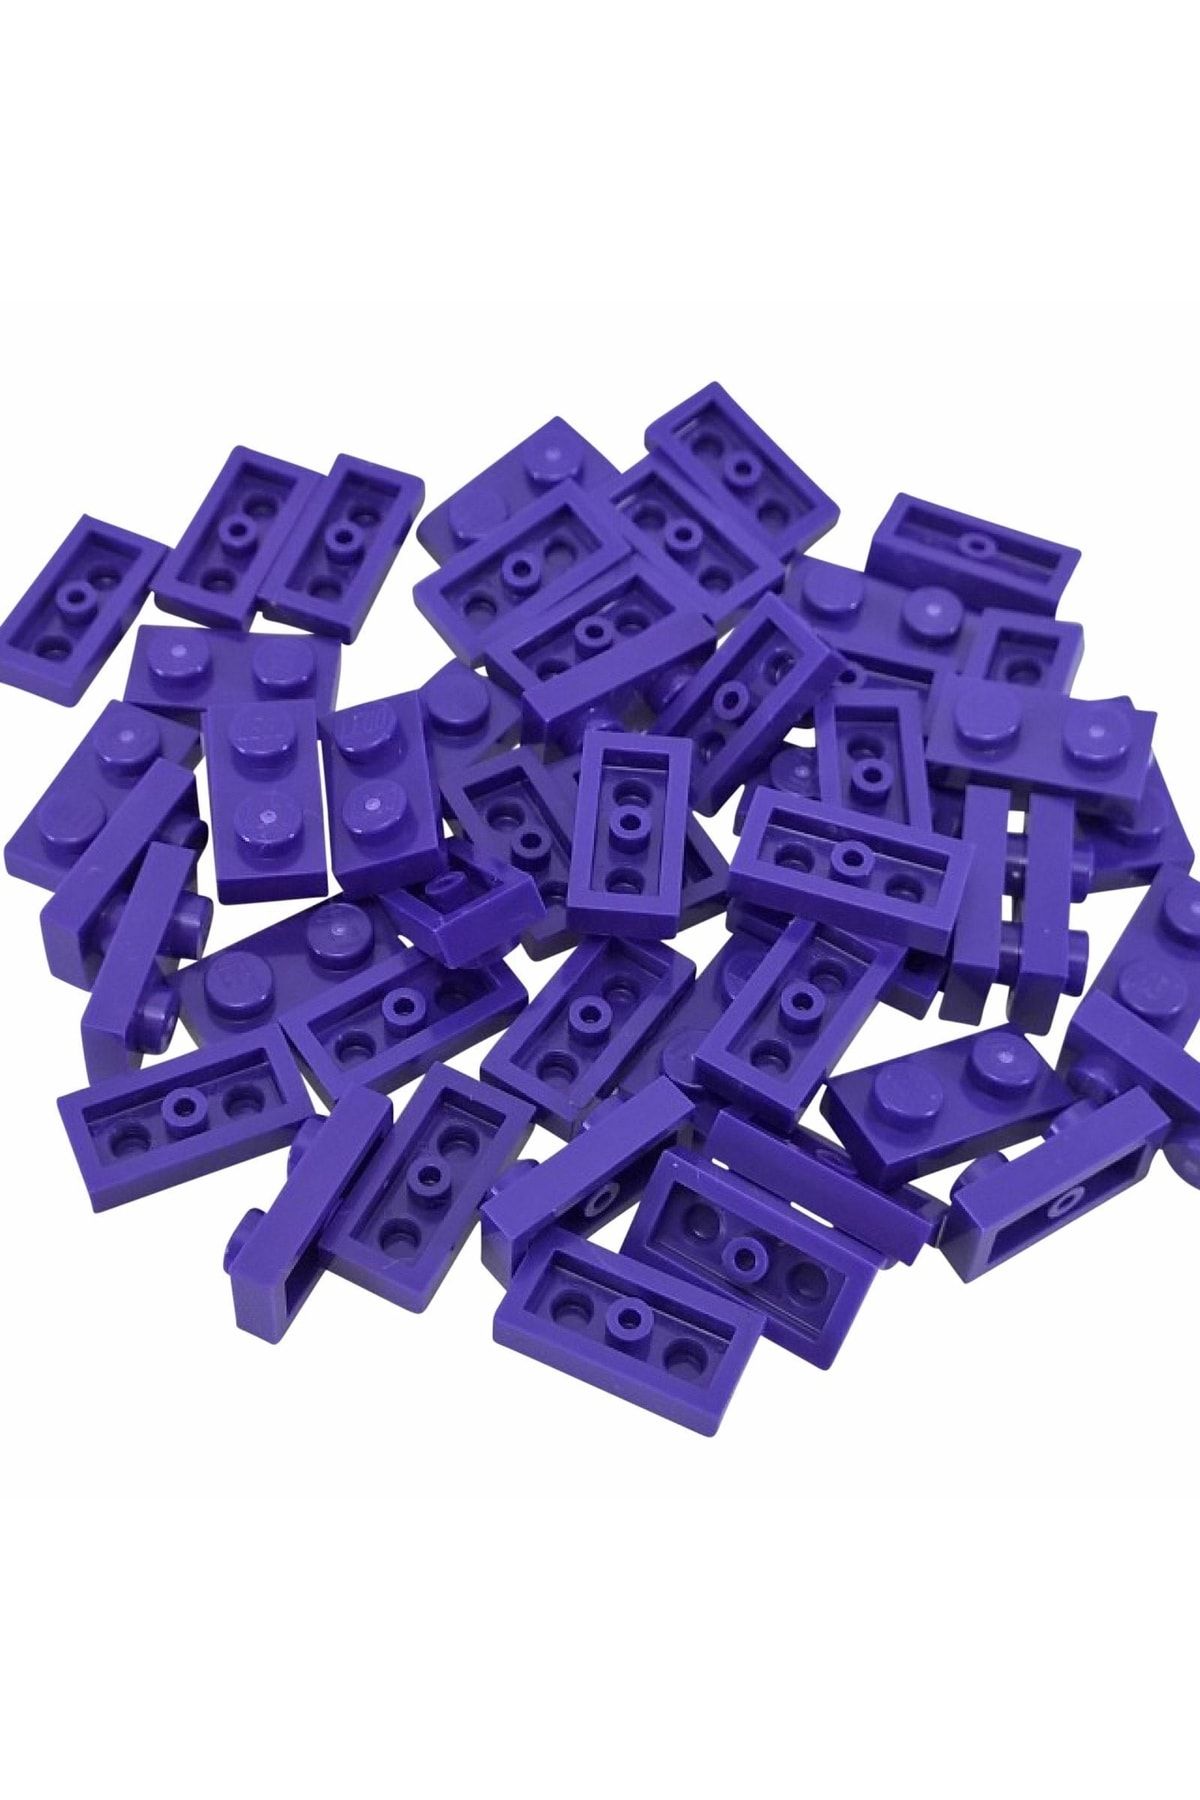 LEGO Moc اصلی لوازم جانبی سفارشی سازنده صفحه آجر تخت بنفش تیره 8 قطعه برای ارسال plate3023